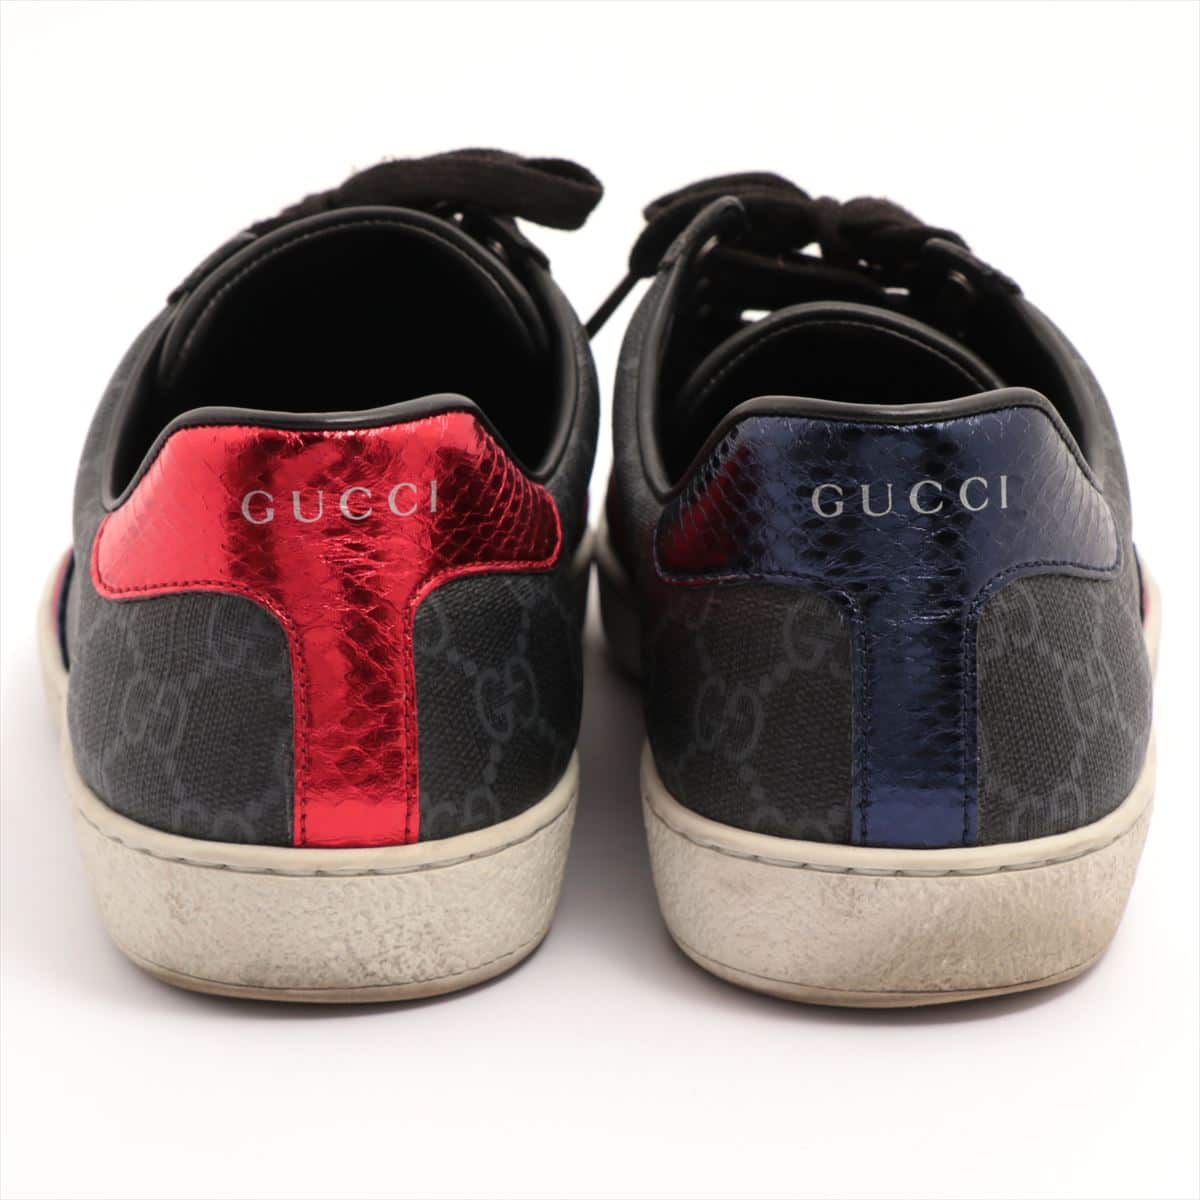 Gucci GG Supreme Leather Sneakers 7 Men's Black 429445 ACE